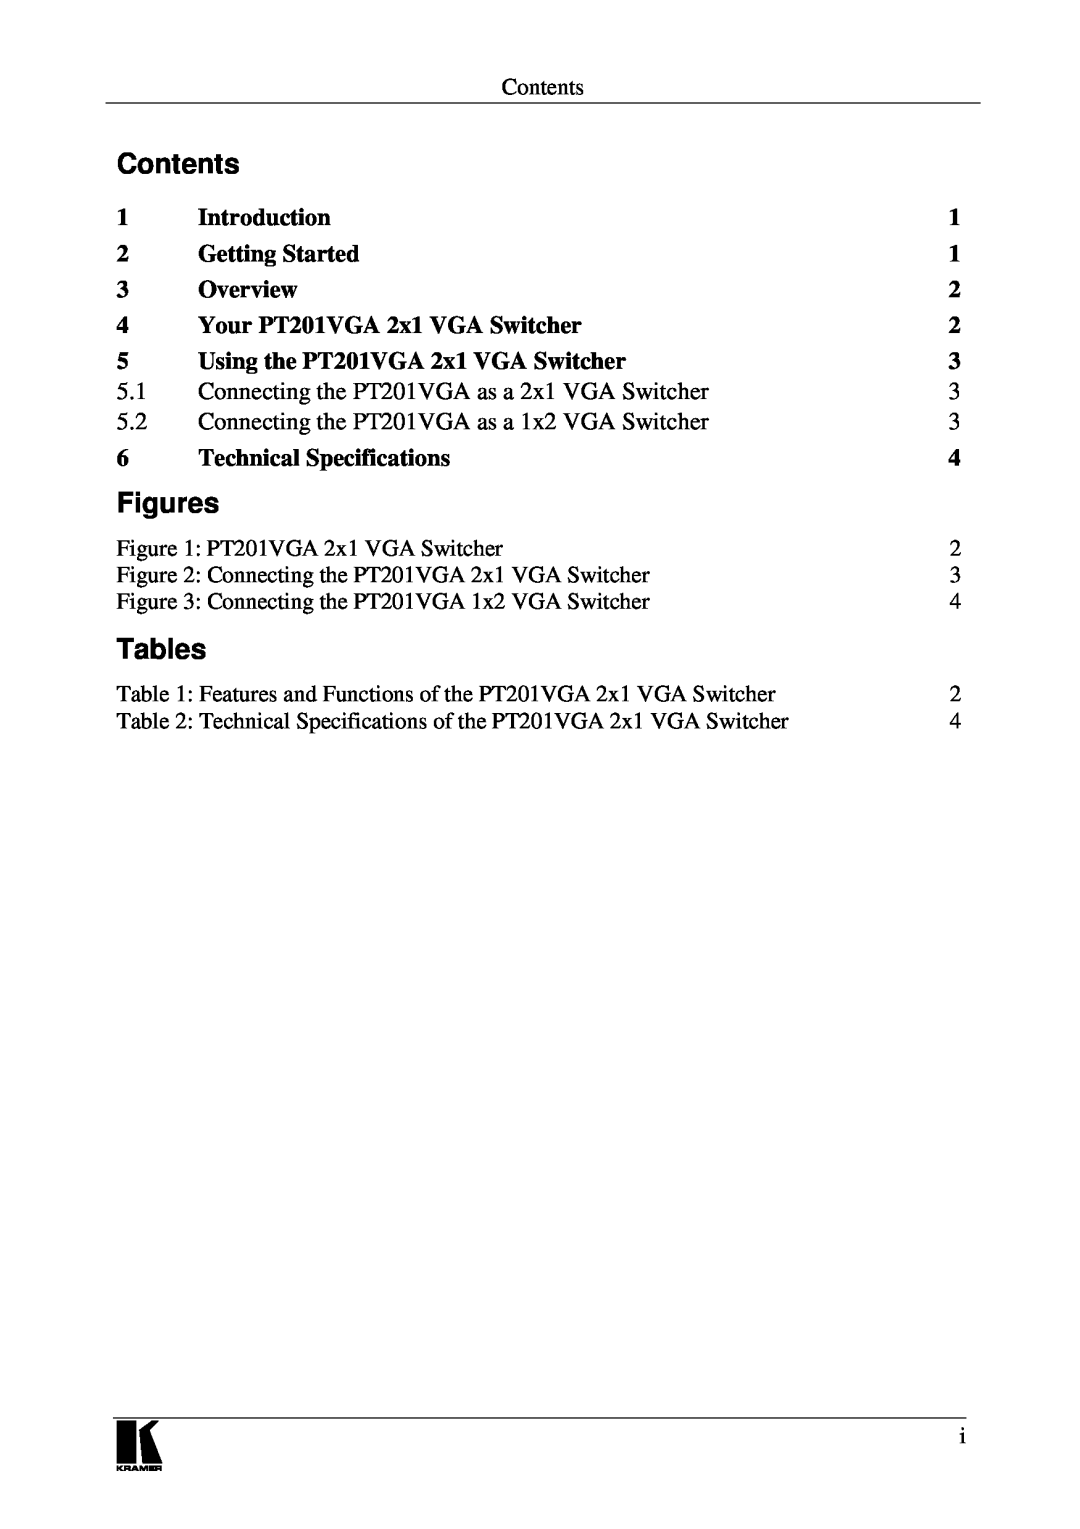 Kramer Electronics PT201VGA user manual Contents, Figures, Tables 